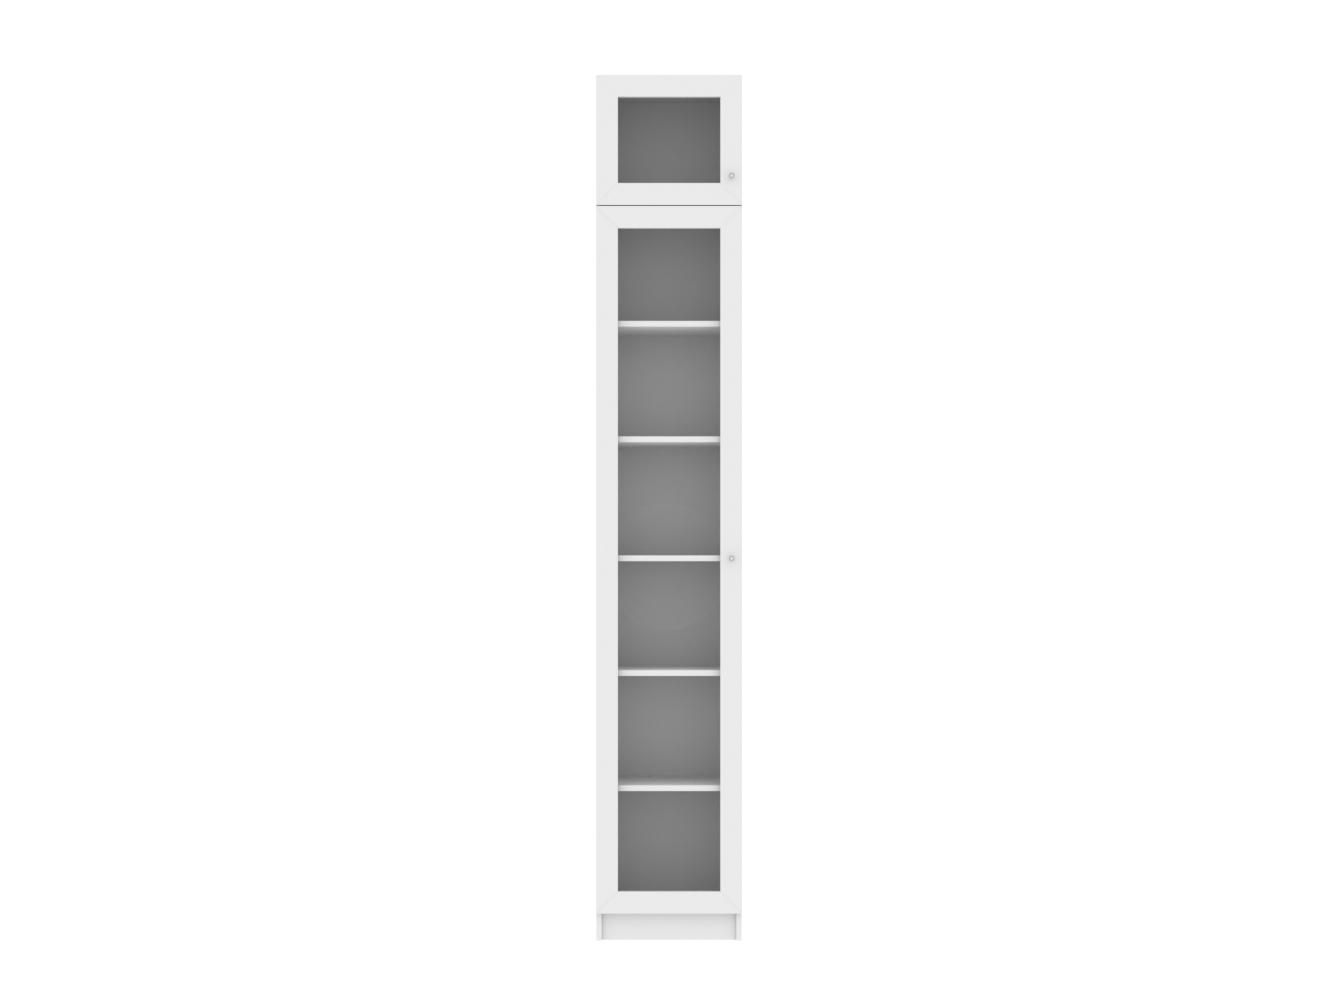  Книжный шкаф Билли 382 white ИКЕА (IKEA) изображение товара